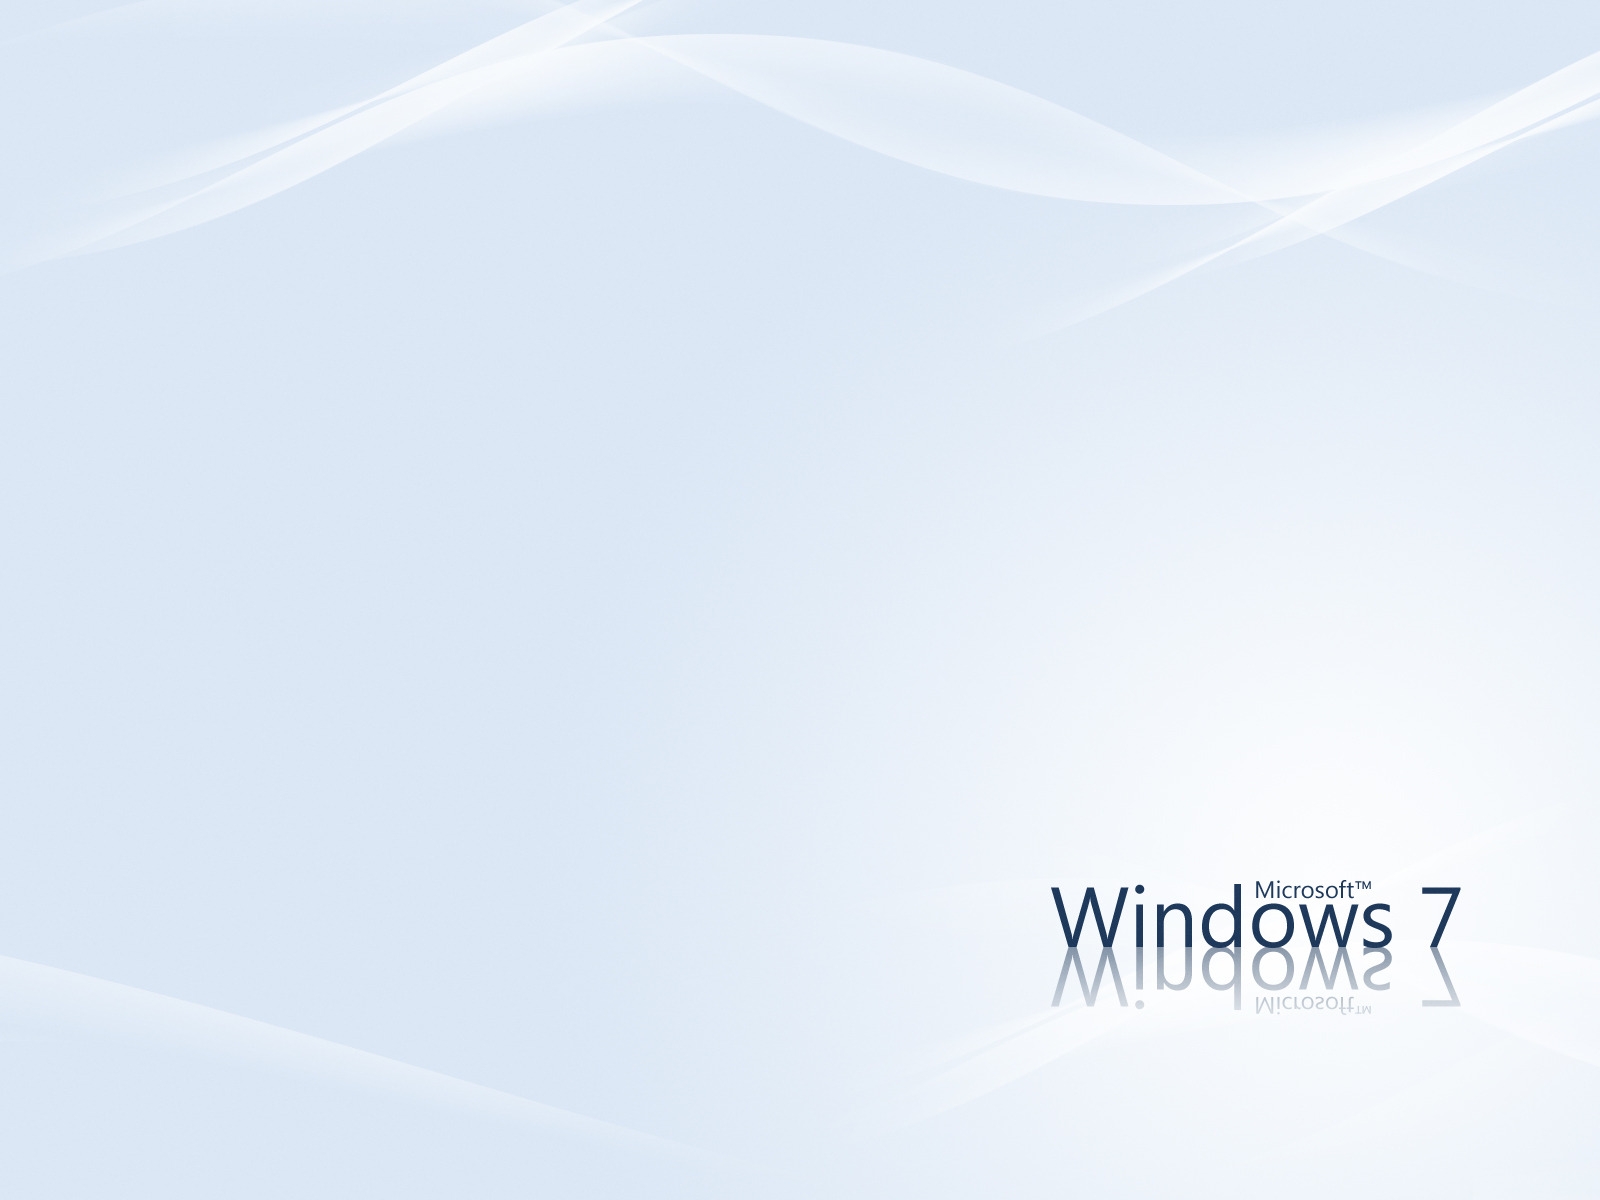 Windows 7 Bright for 1600 x 1200 resolution